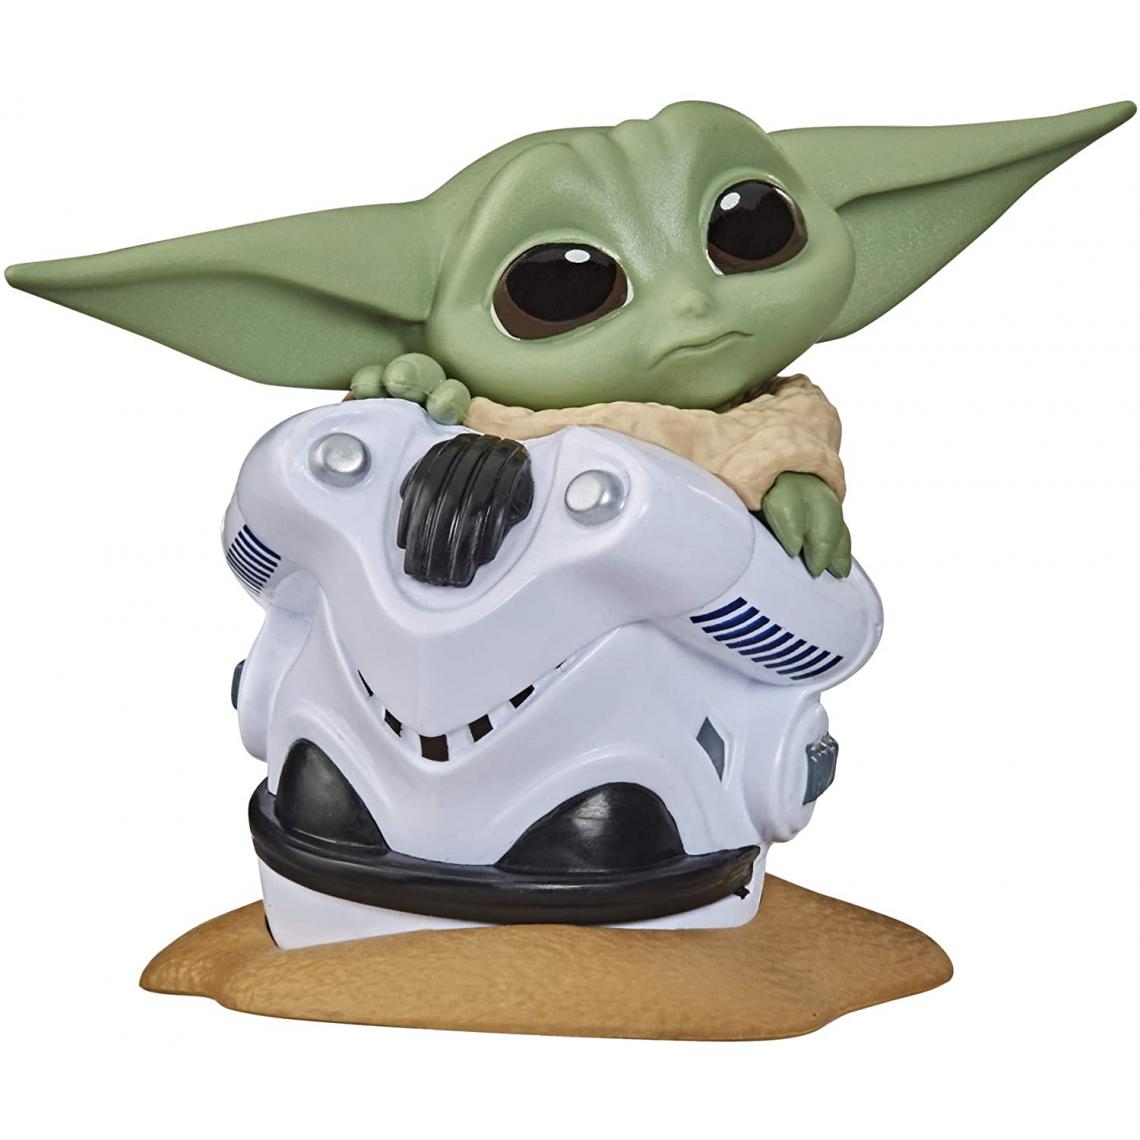 Hasbro - Figurine Baby Yoda - Star Wars - Films et séries